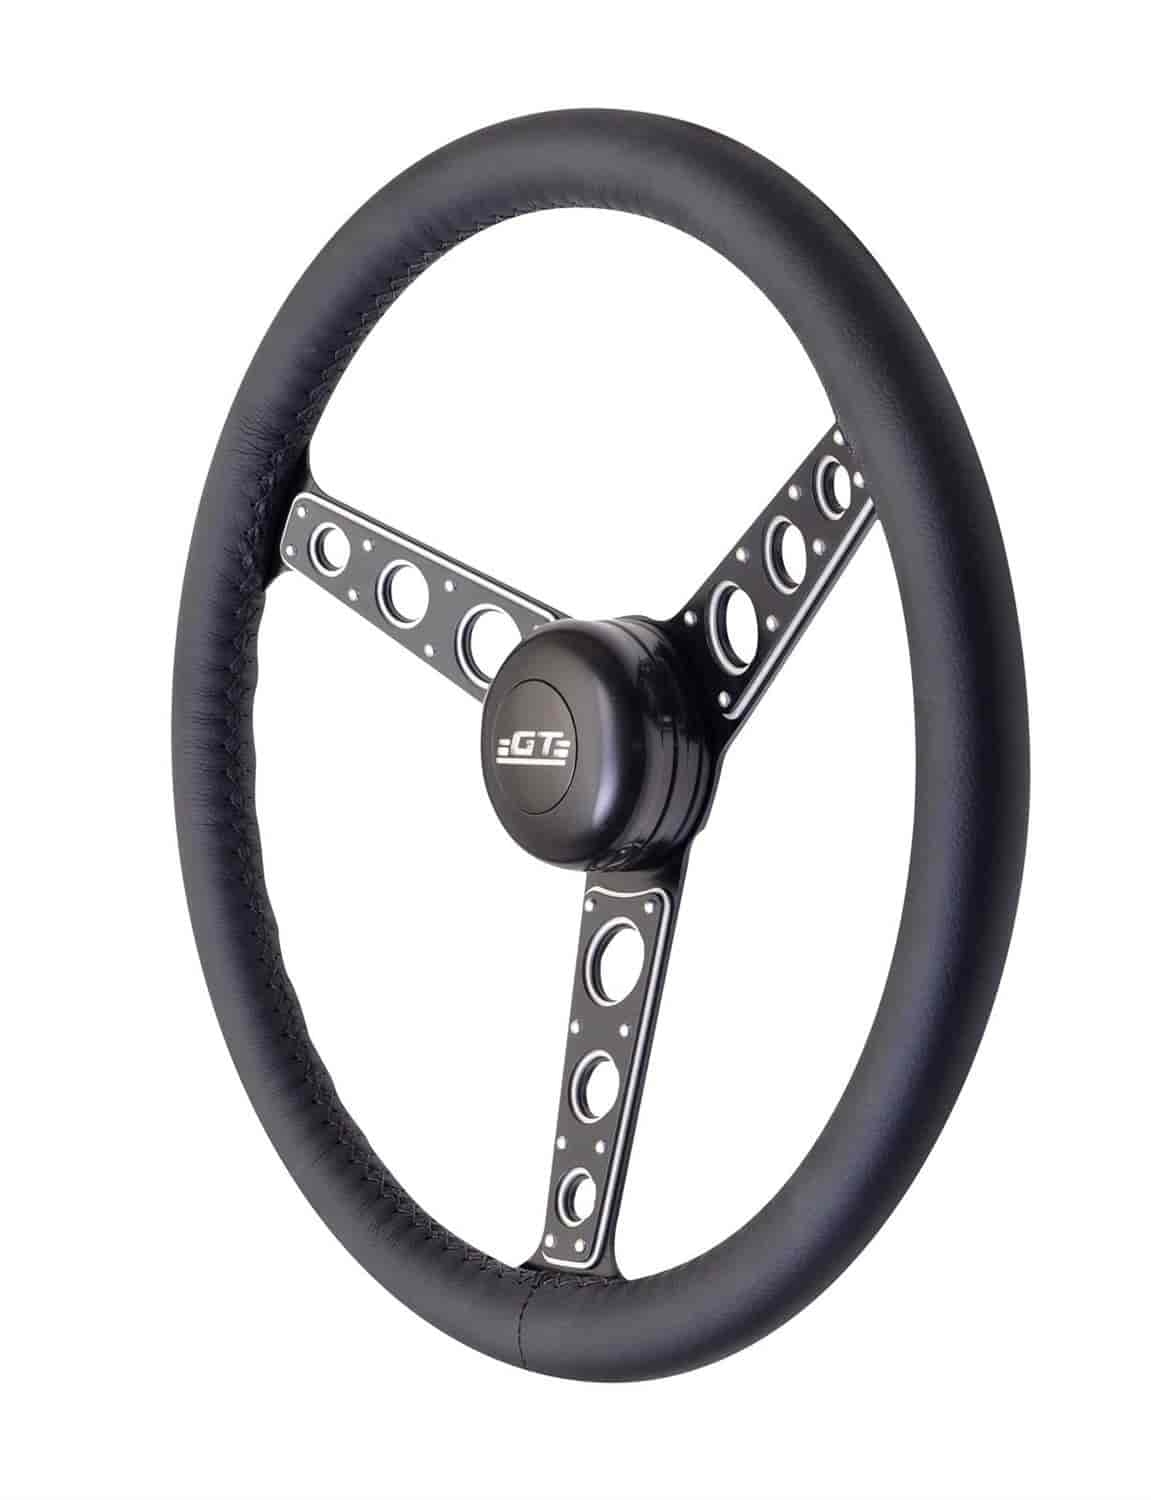 GT3 Pro Touring Steering Wheel Diameter: 15